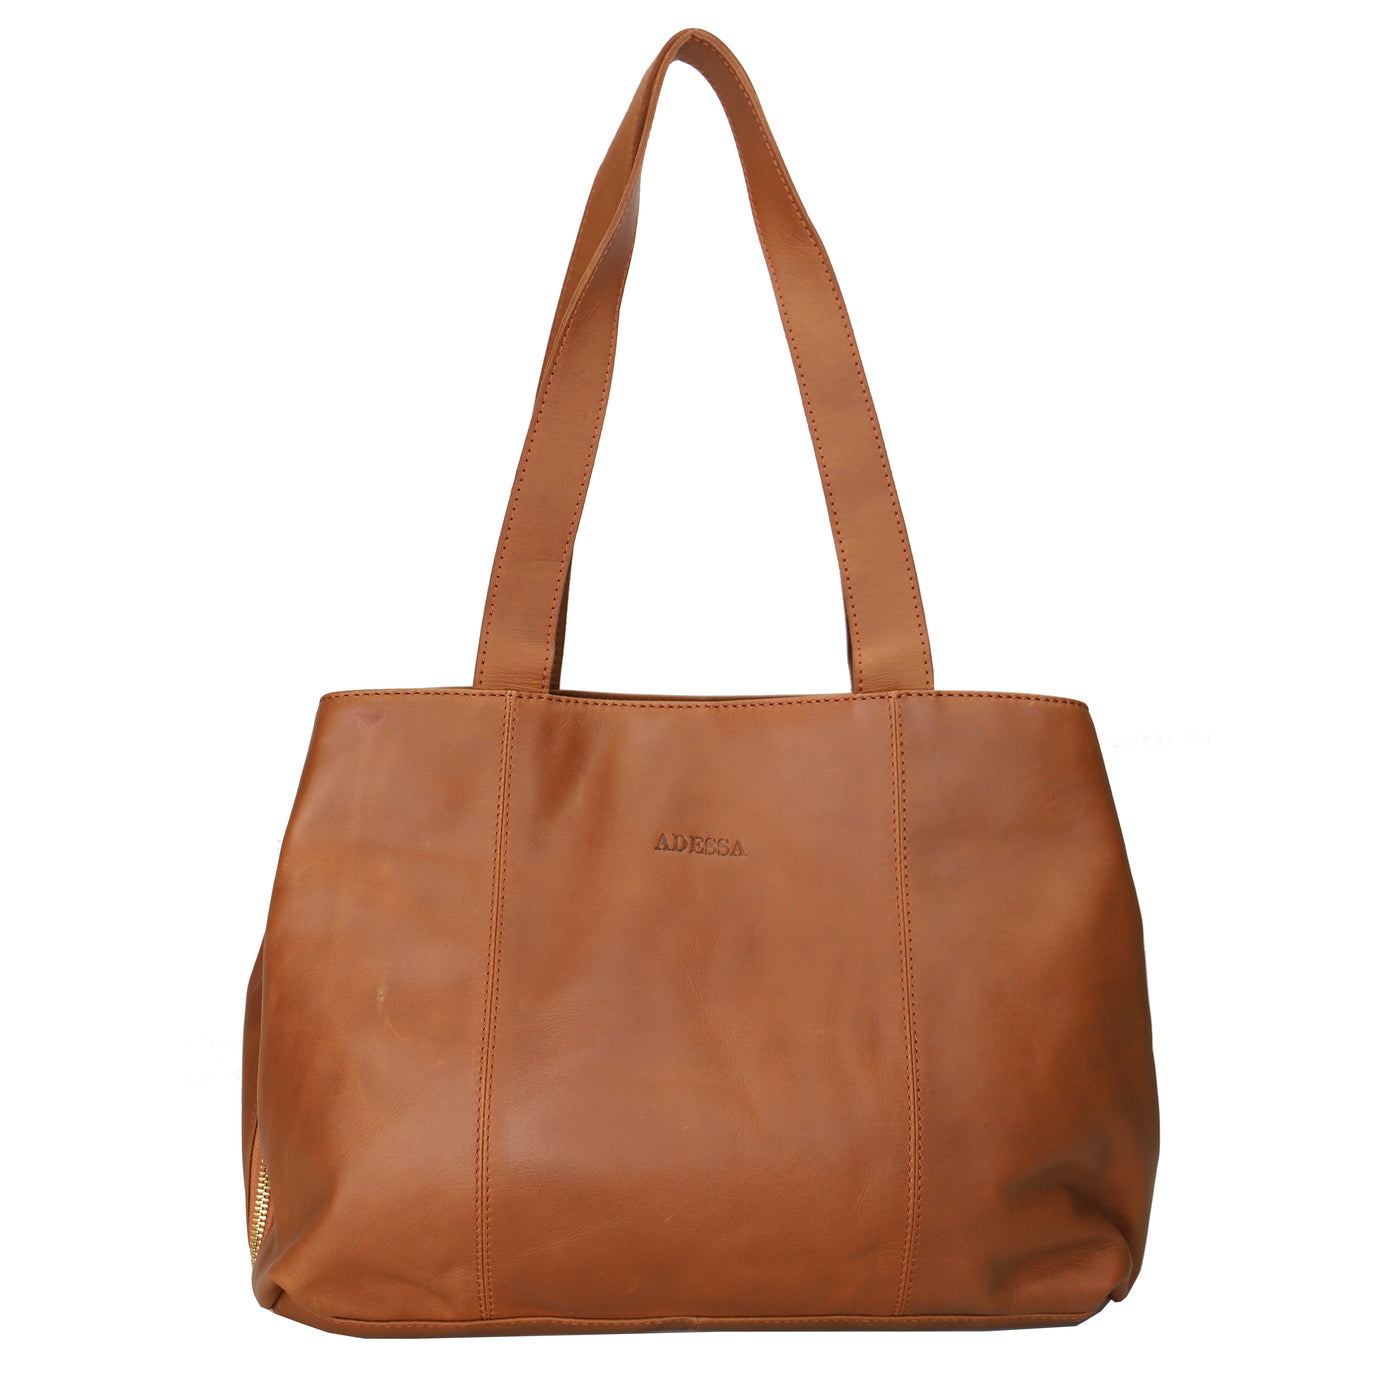 Tan leather handbags